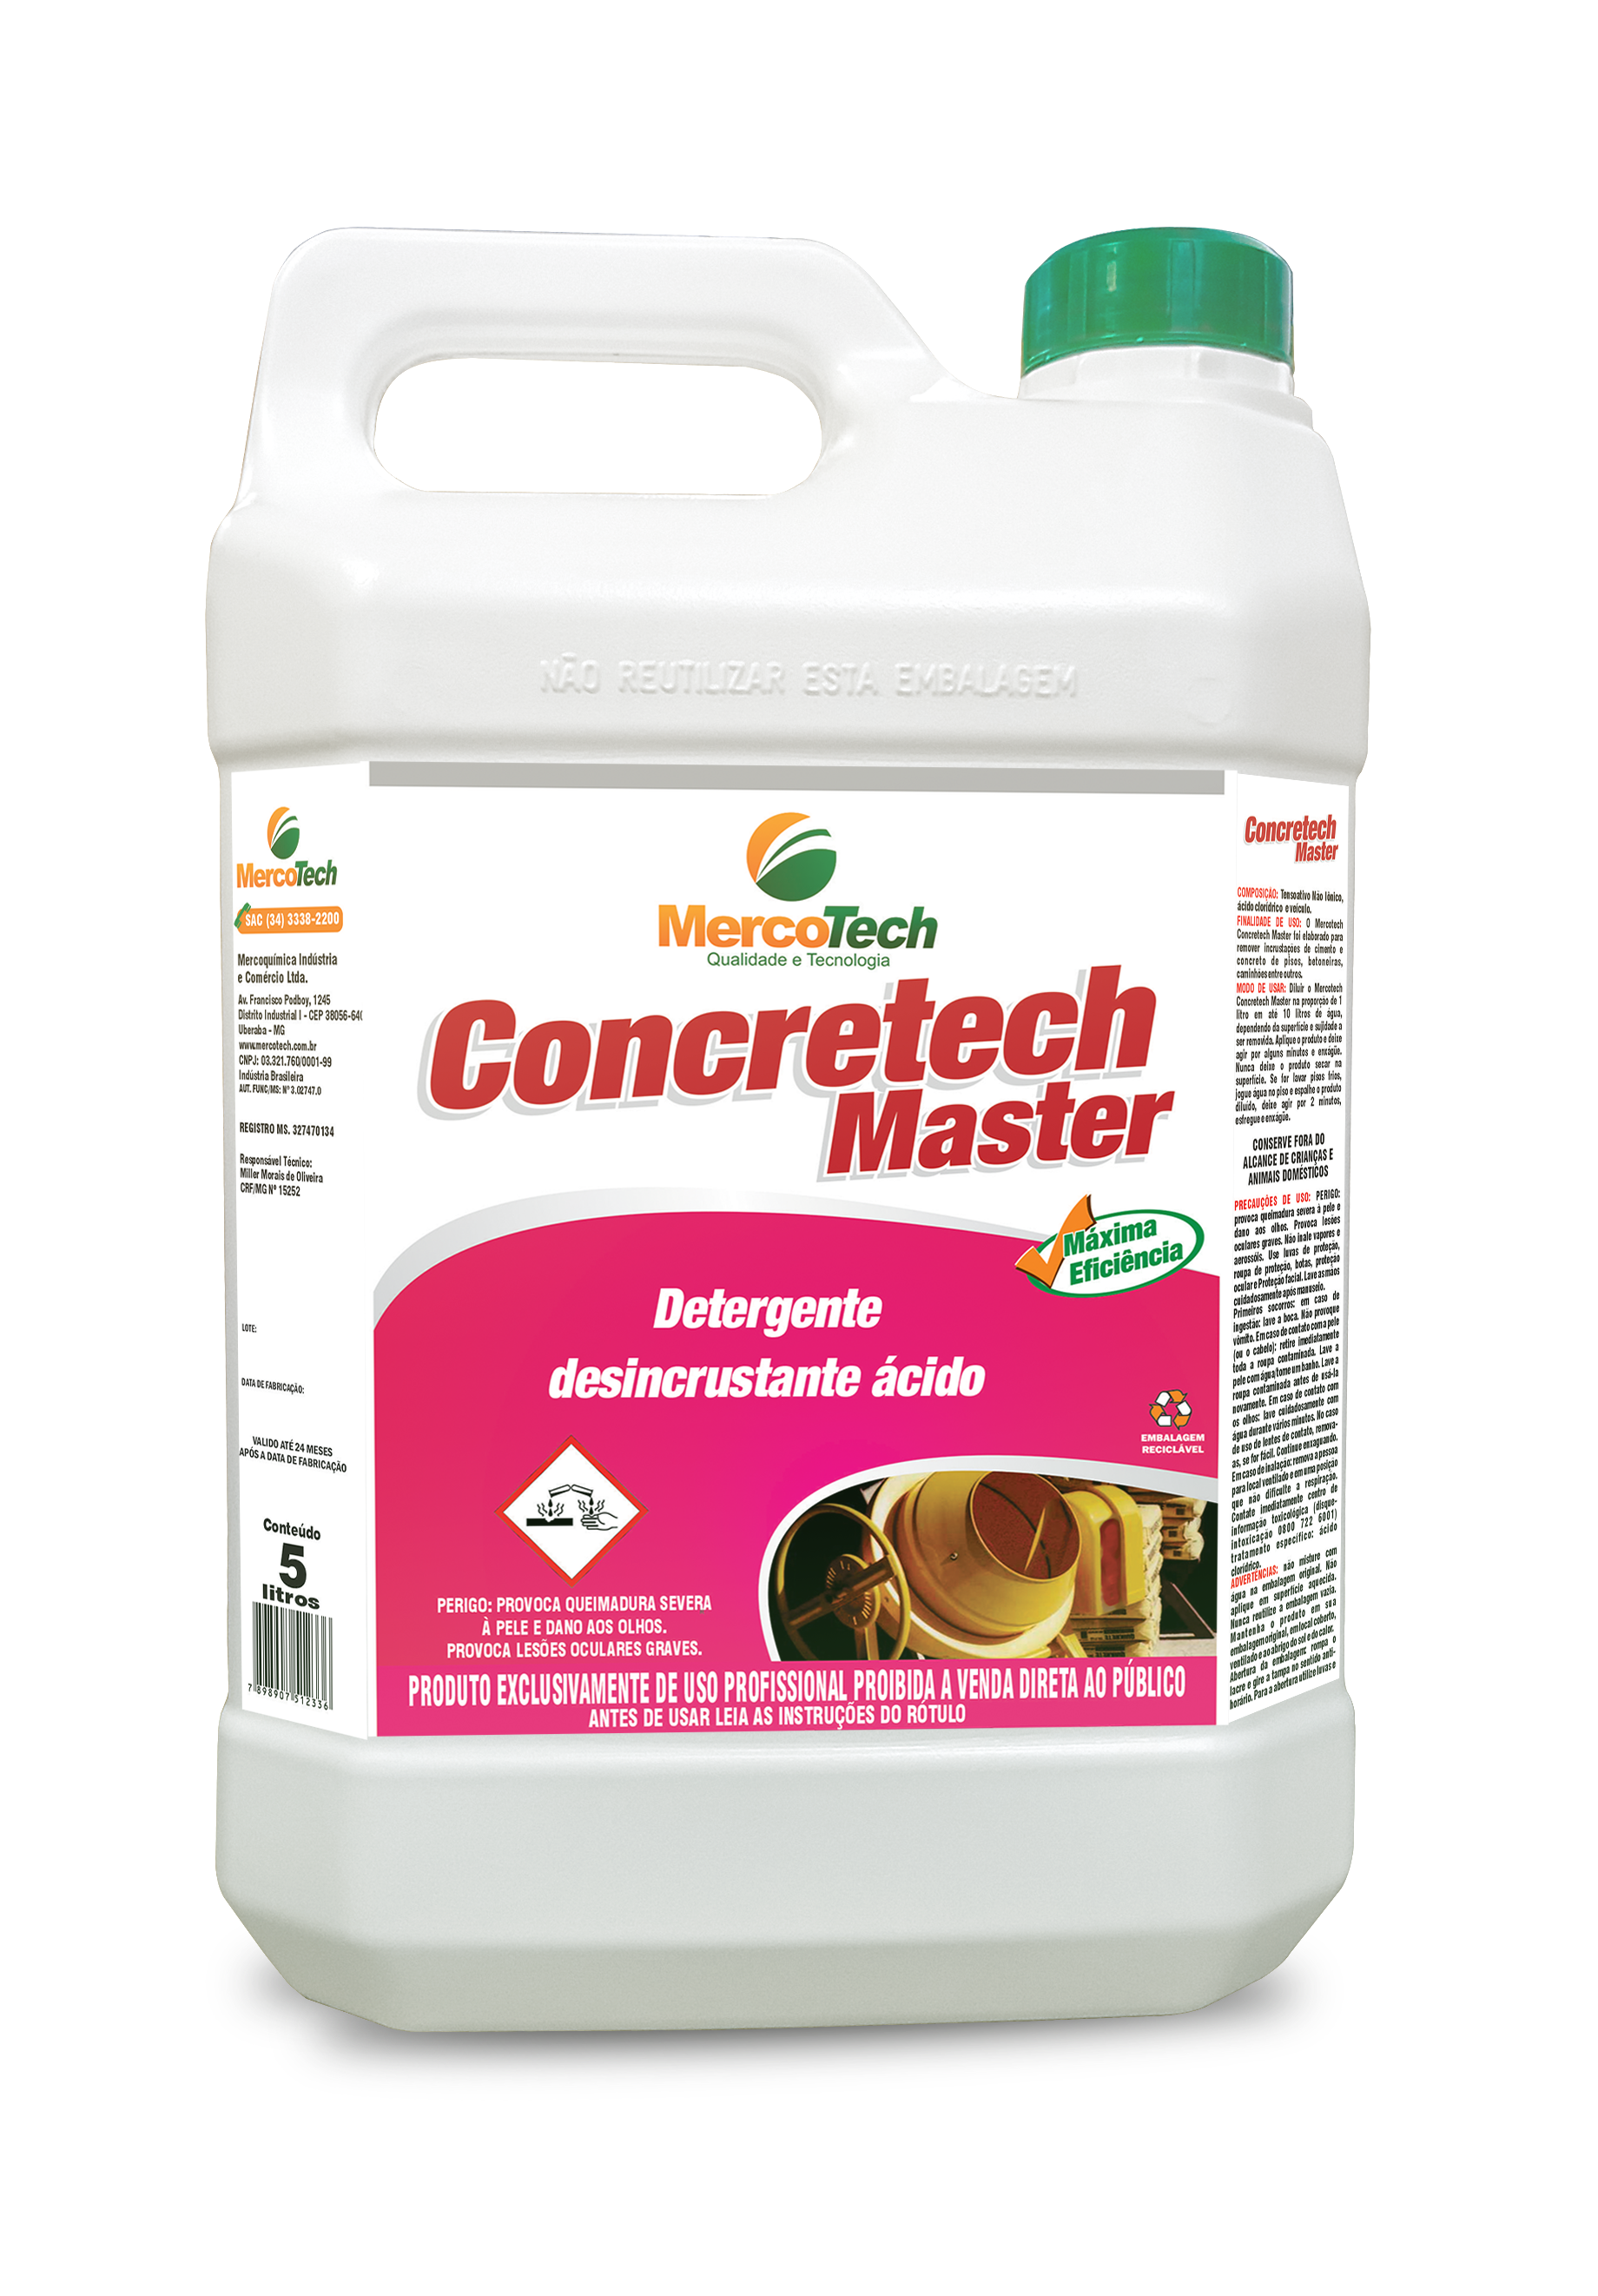 Detergente desincrustante concretech master 05 litros mercotech